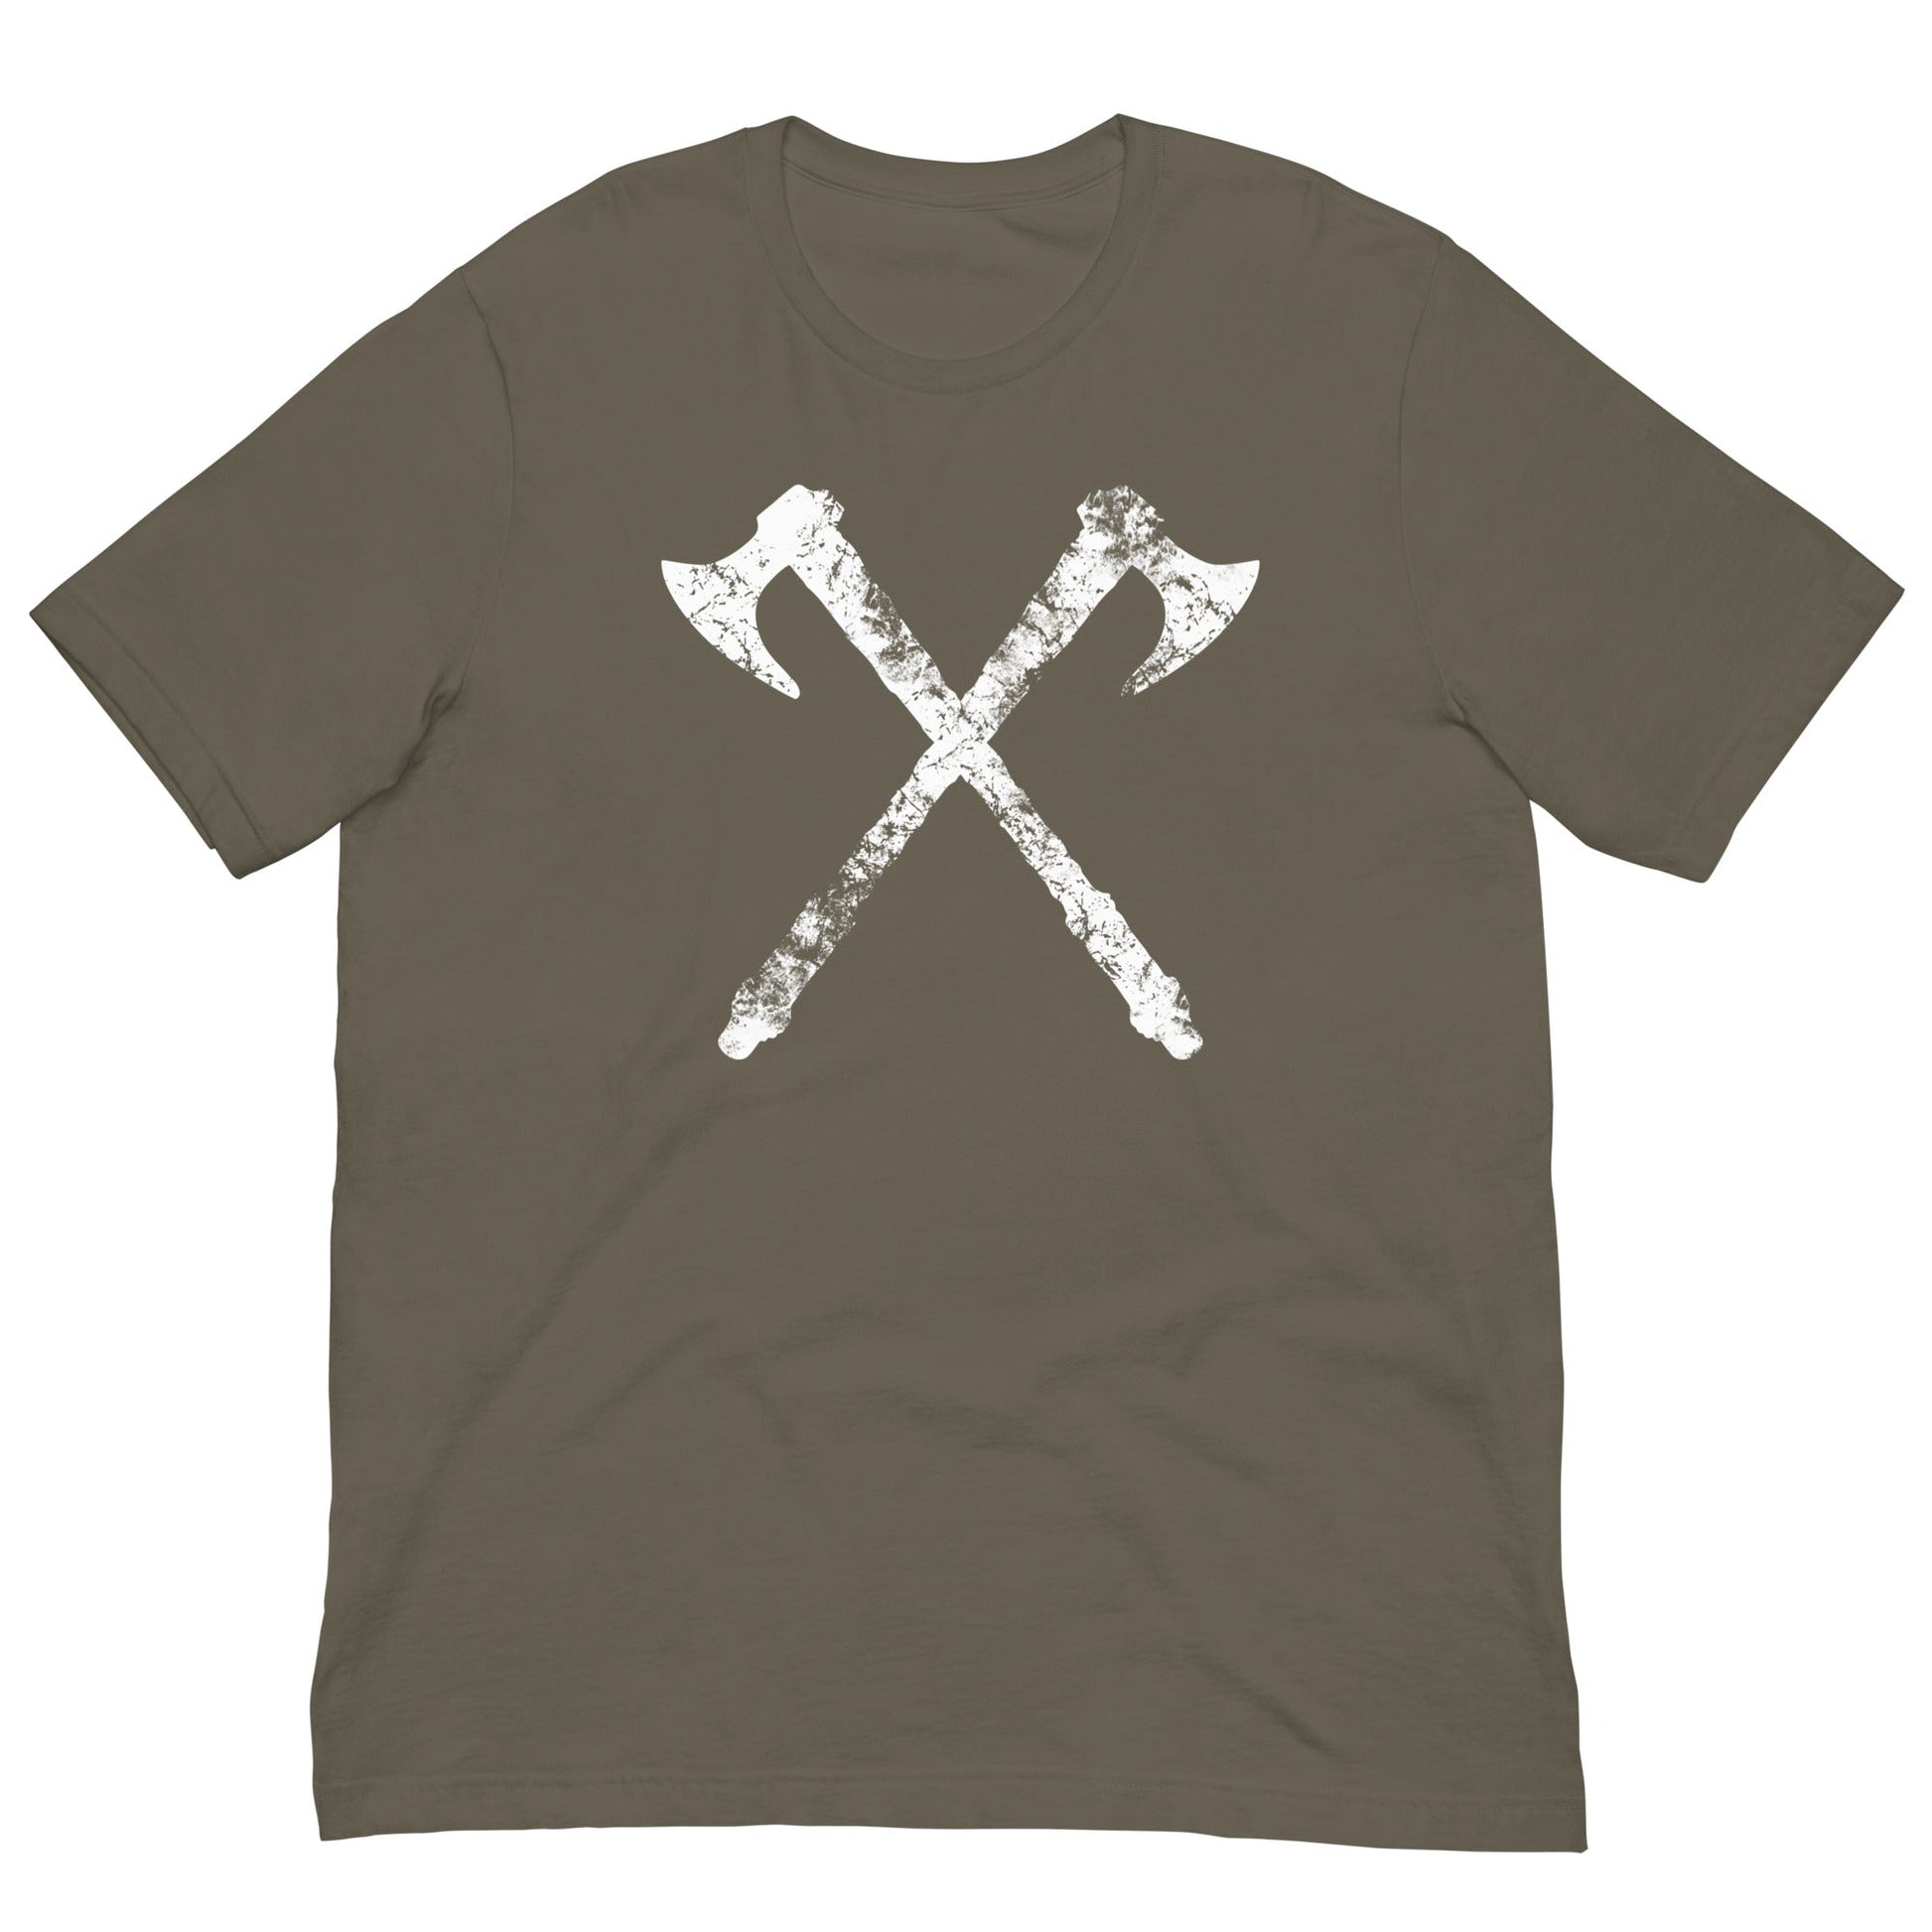 Scar Design Army / S Vintage Viking Axes T-shirt